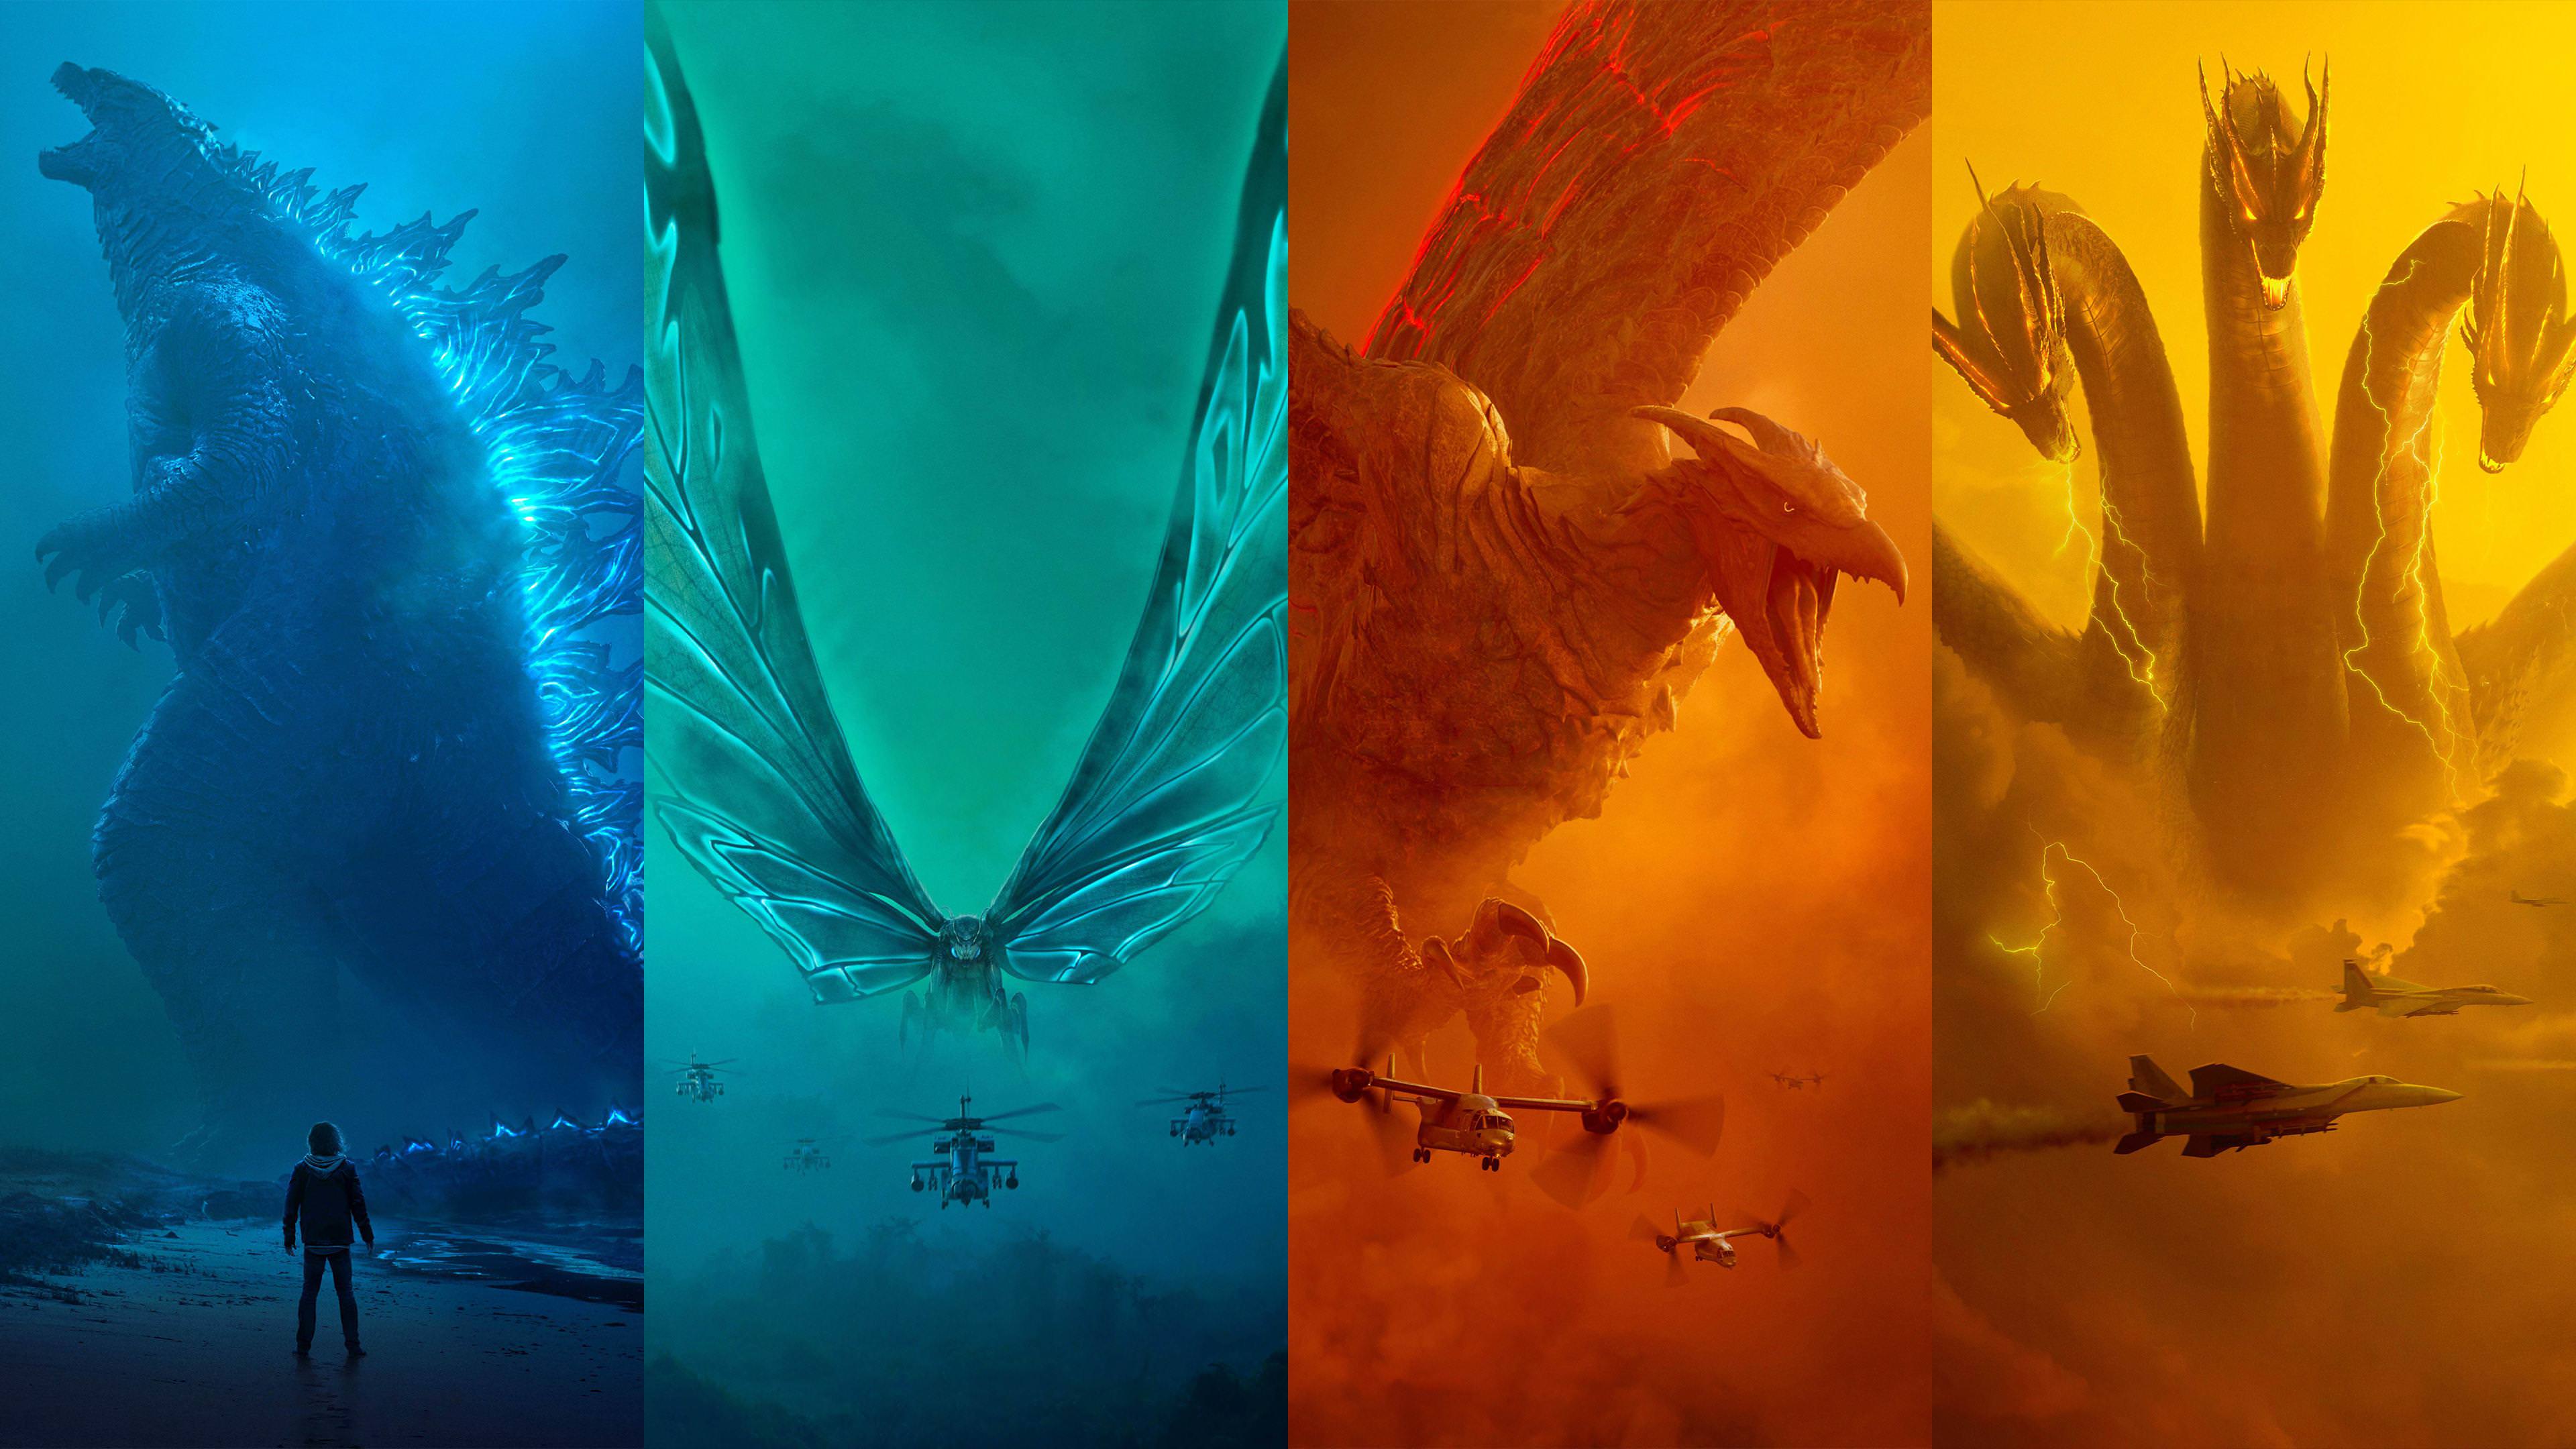 Made A Godzilla Wallpaper Of The Posters - Godzilla Rey De Los Monstruos , HD Wallpaper & Backgrounds